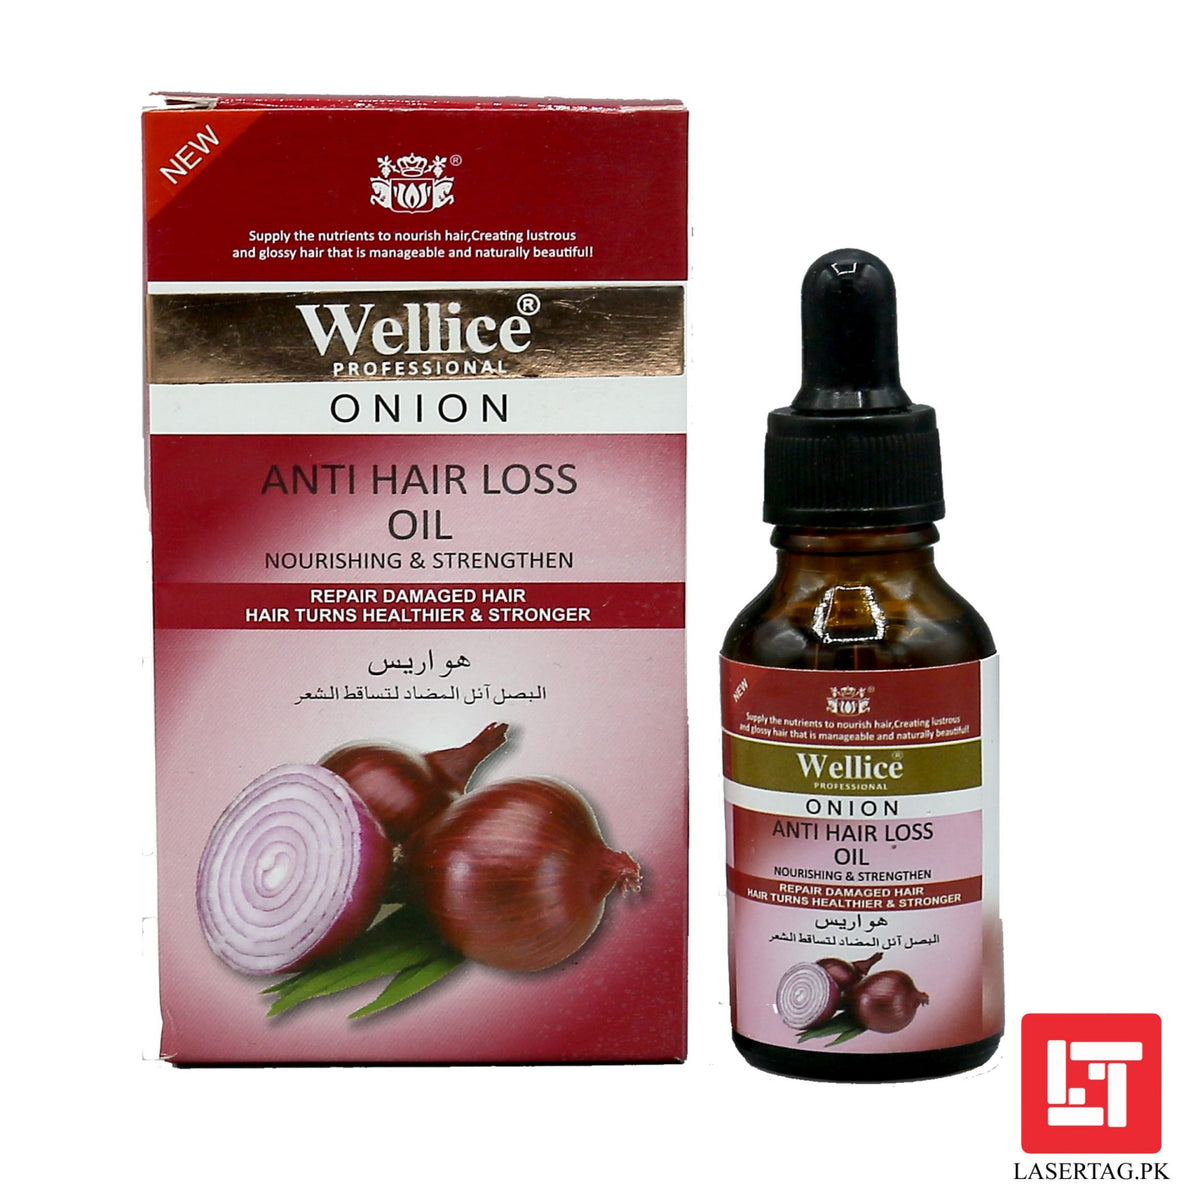 Wellice Onion Anti Hair Loss Oil Onion Oil Nourishing &amp; Strengthen 30ml freeshipping - lasertag.pk